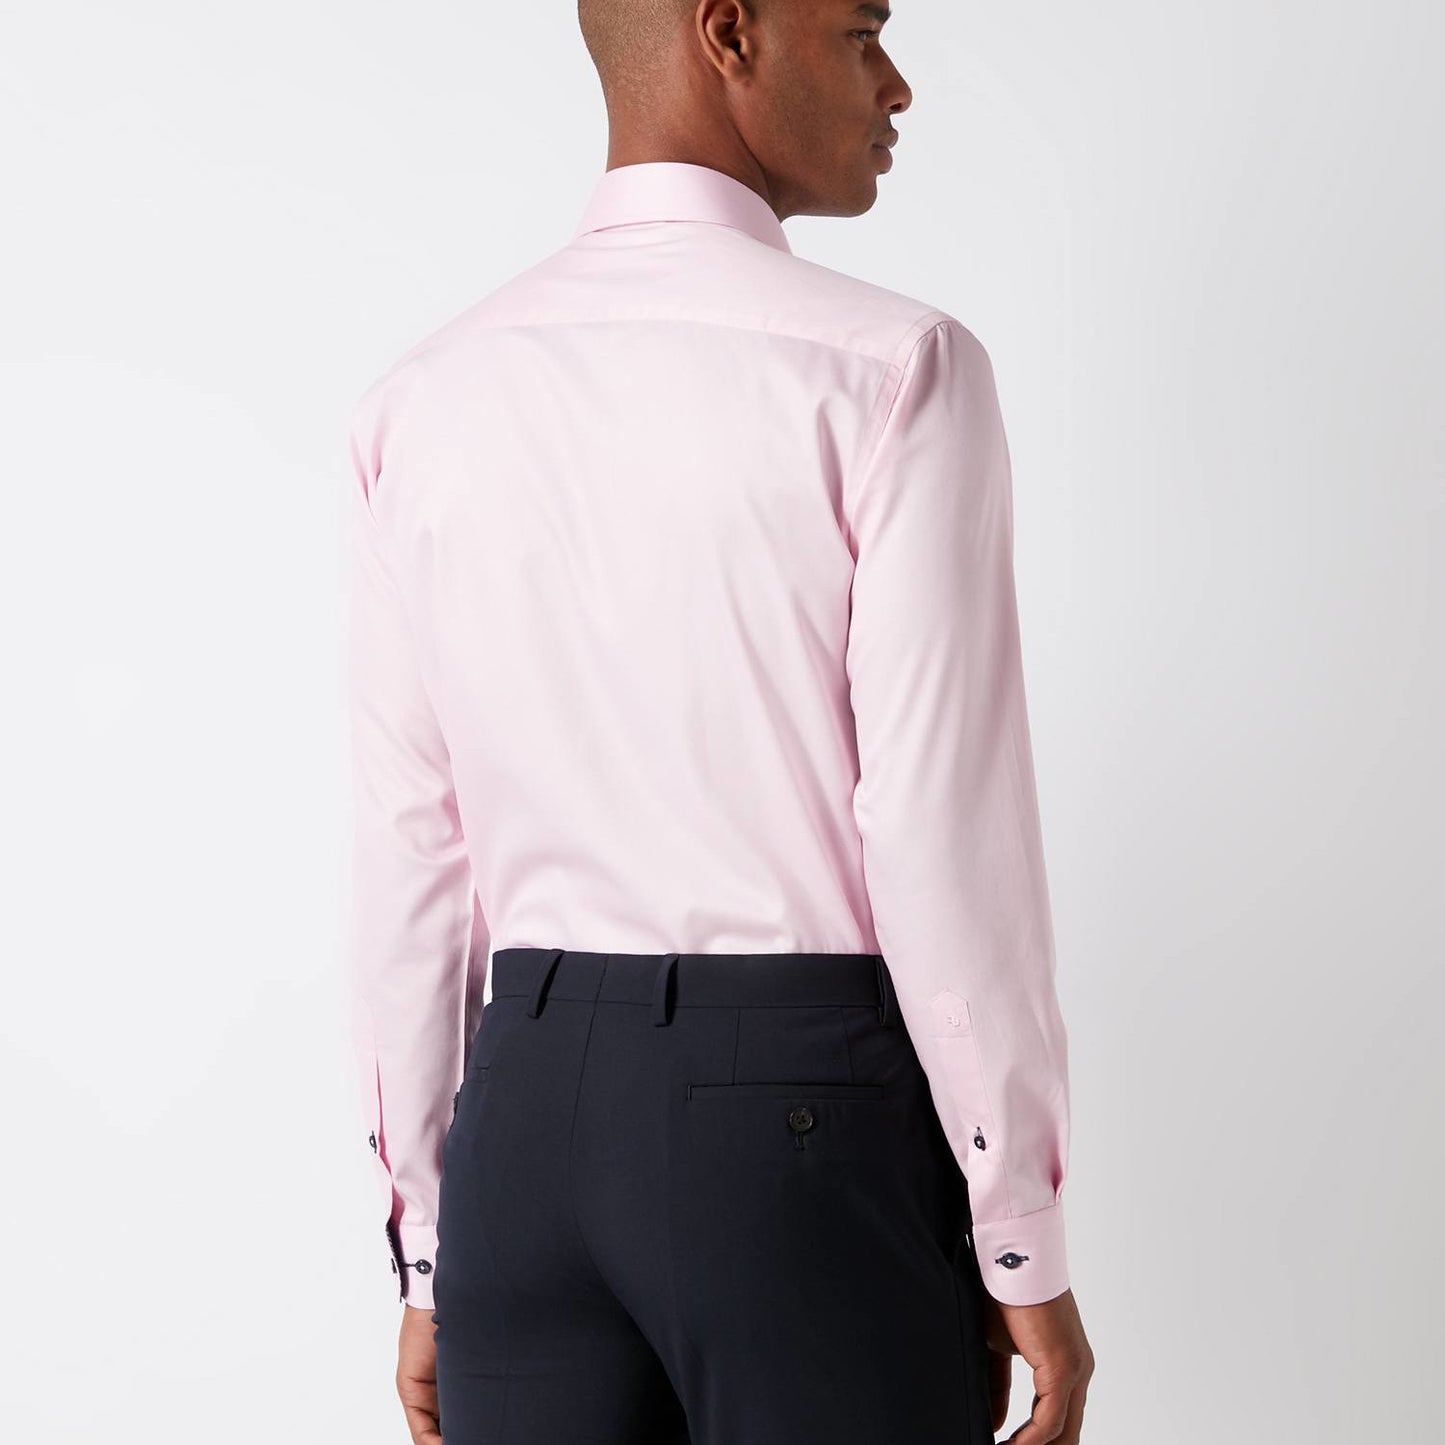 Remus Uomo 17036 Tapered Fit Pink Long Sleeve Dress Shirt